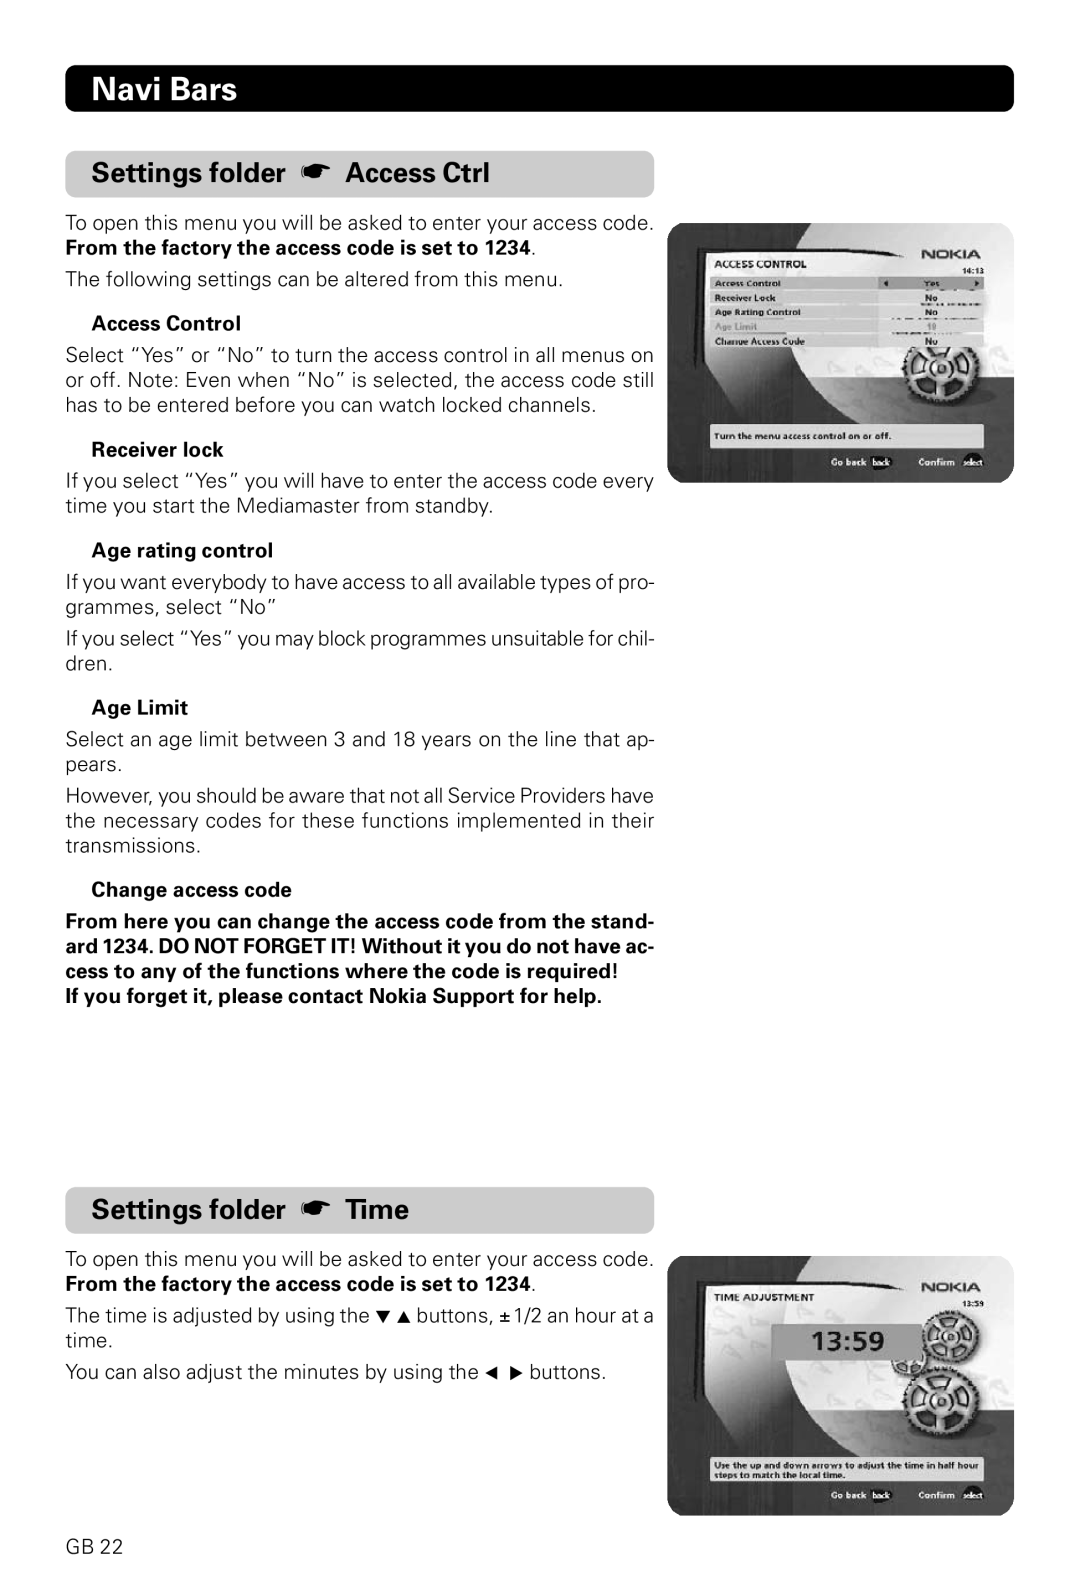 Nokia 221 T Settings folder Access Ctrl, Settings folder Time, Navi Bars, Access Control, Receiver lock, Age Limit 